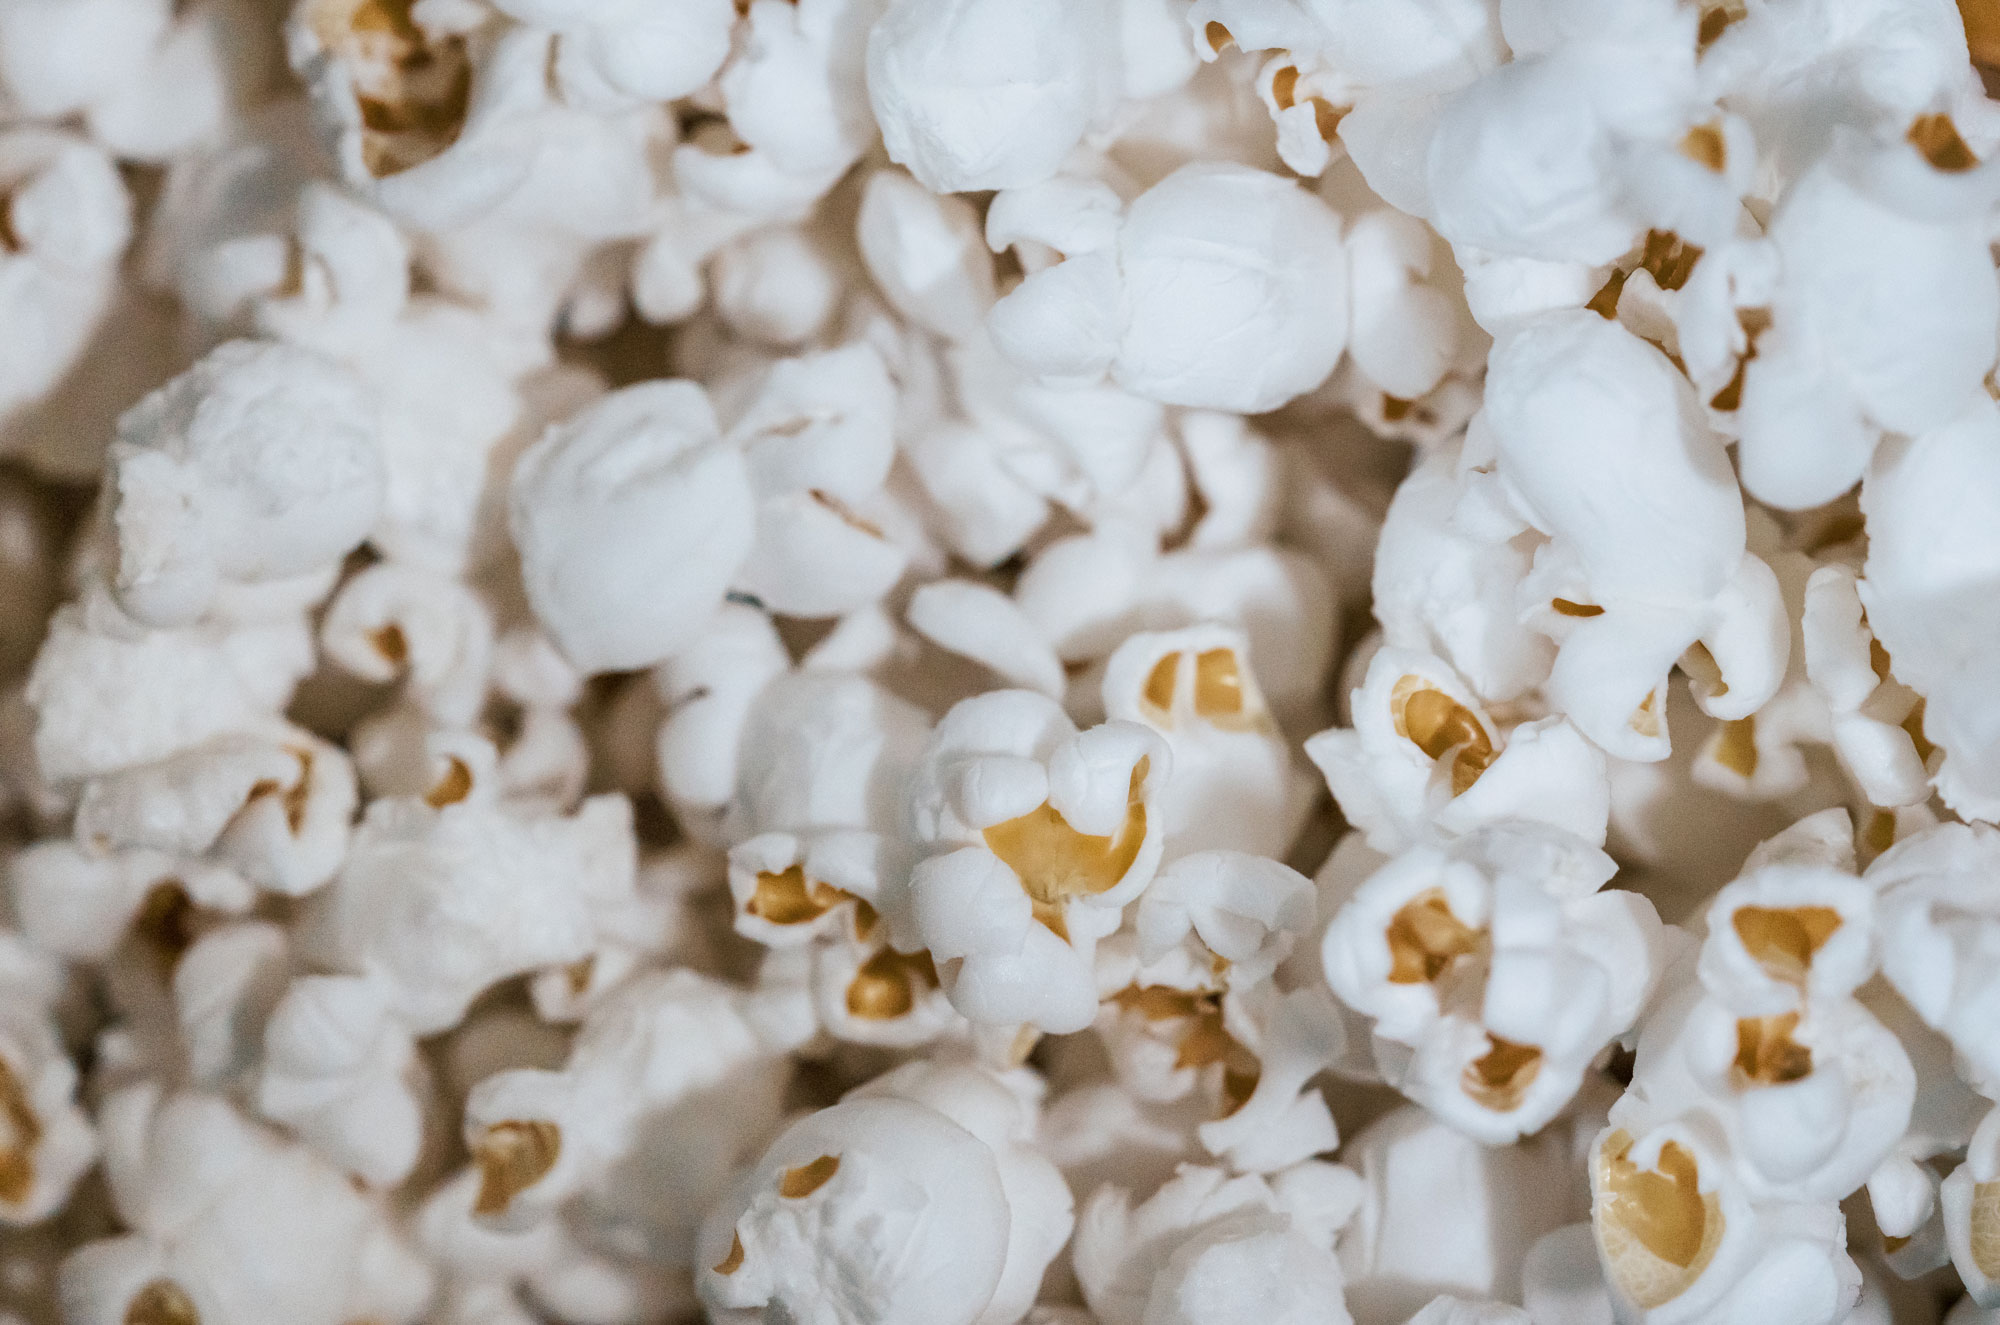 Photograph of popped popcorn kernels. The photo shows popped, white popcorn kernels.